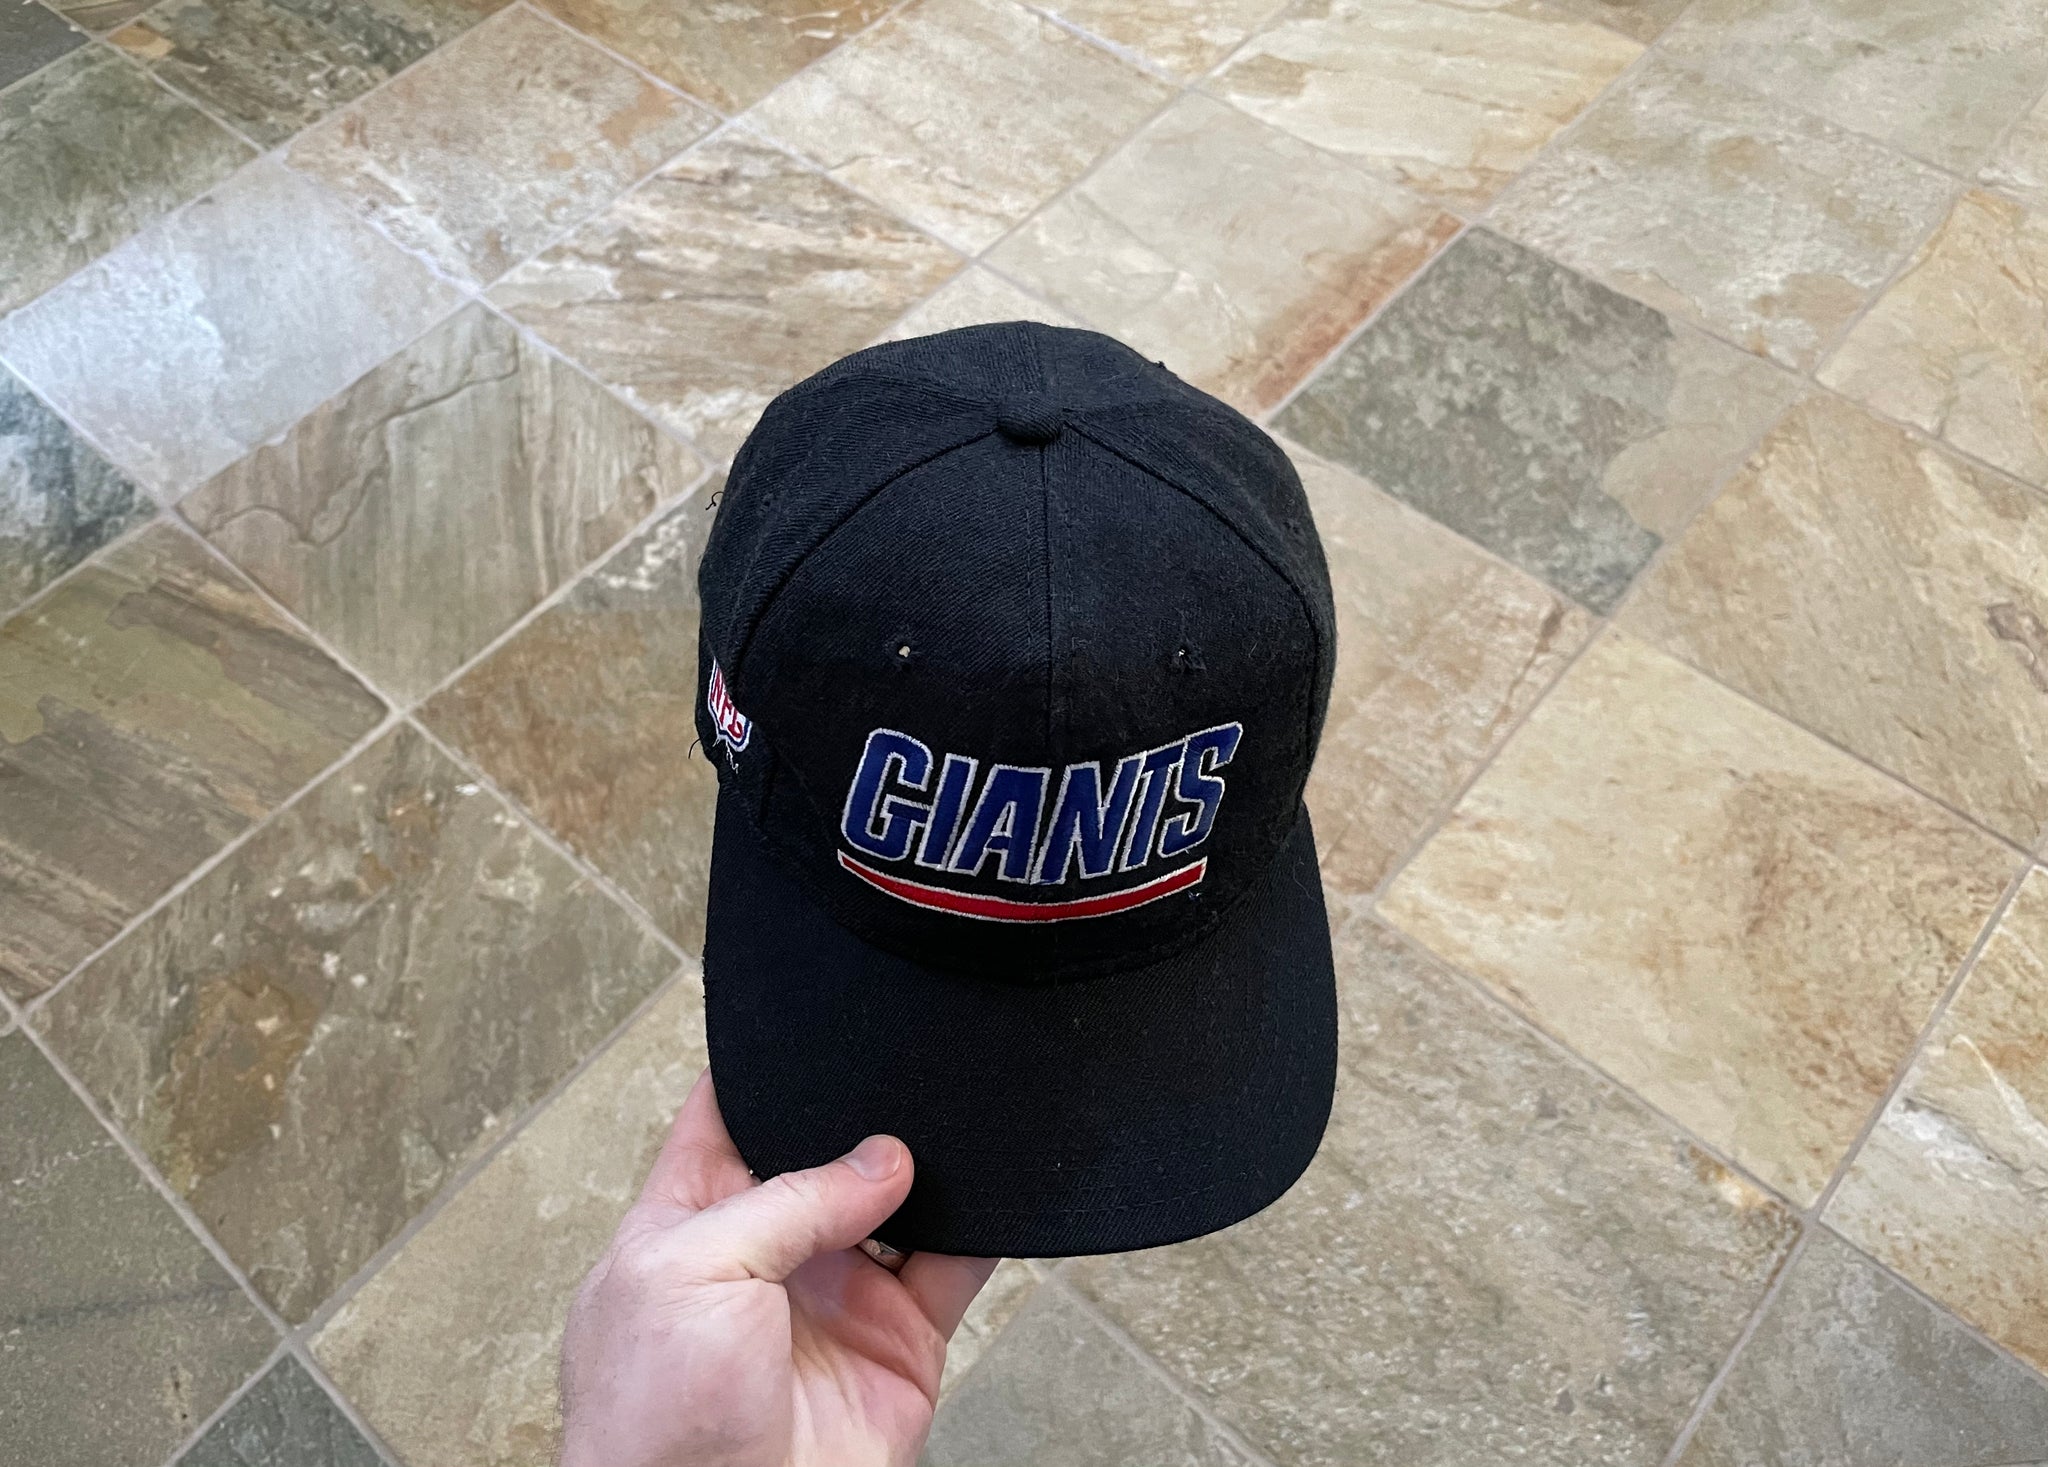 Sports Specialties Raiders Hats for Men